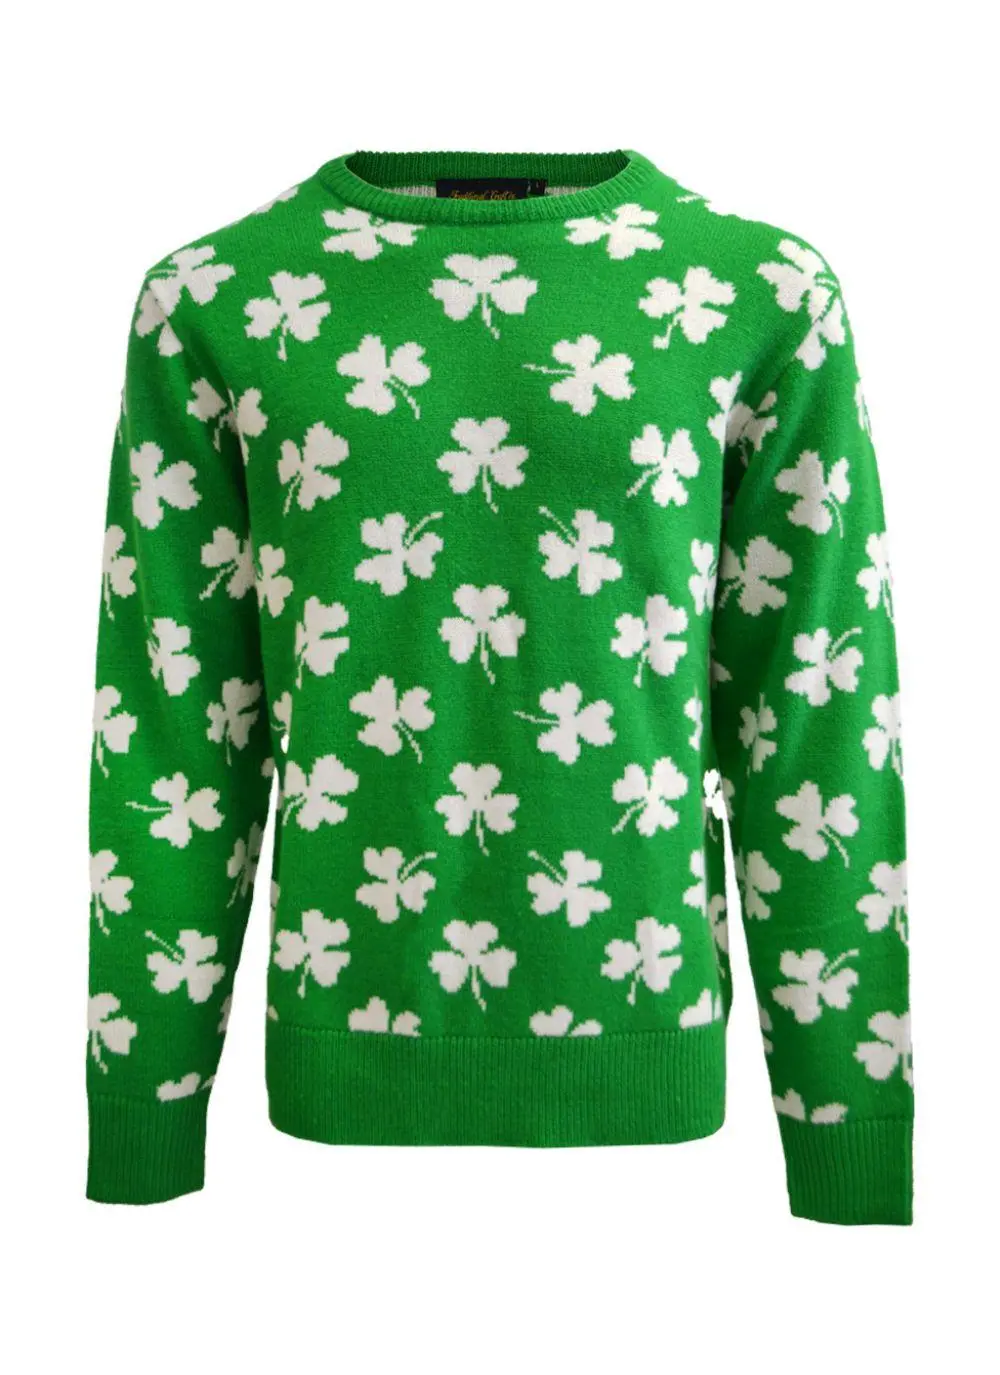 Unisex Green Knit Shamrock Sweater